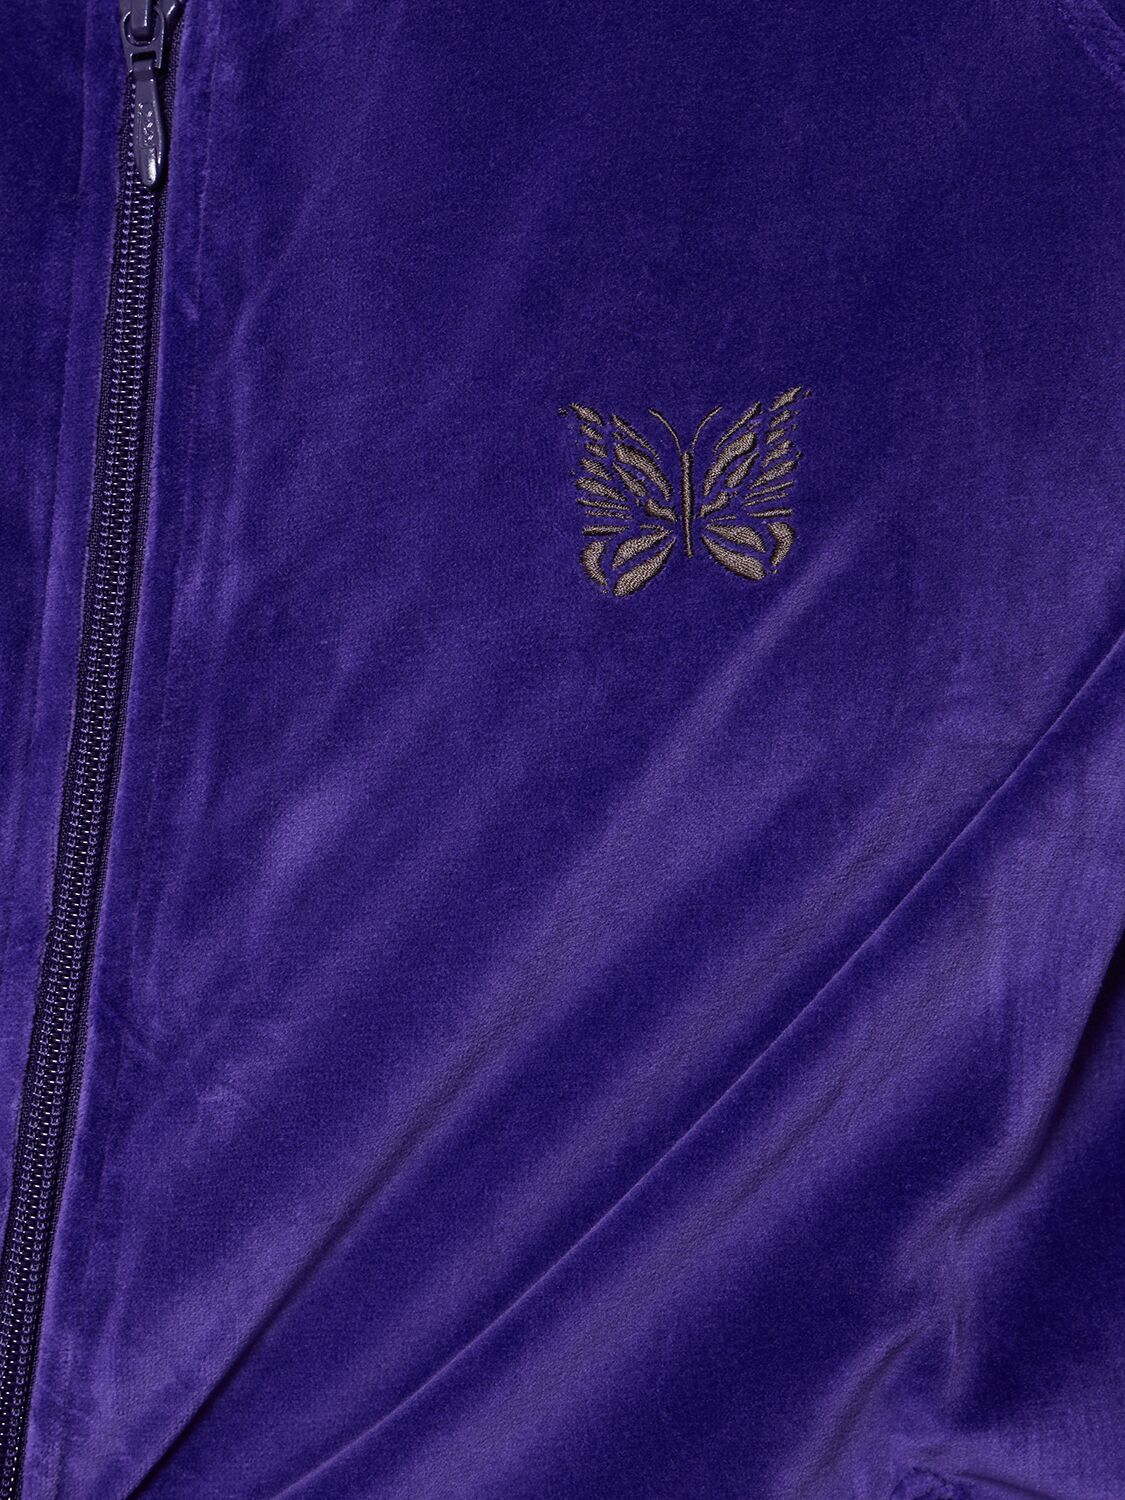 Purple Velour Jacket, Track Jacket